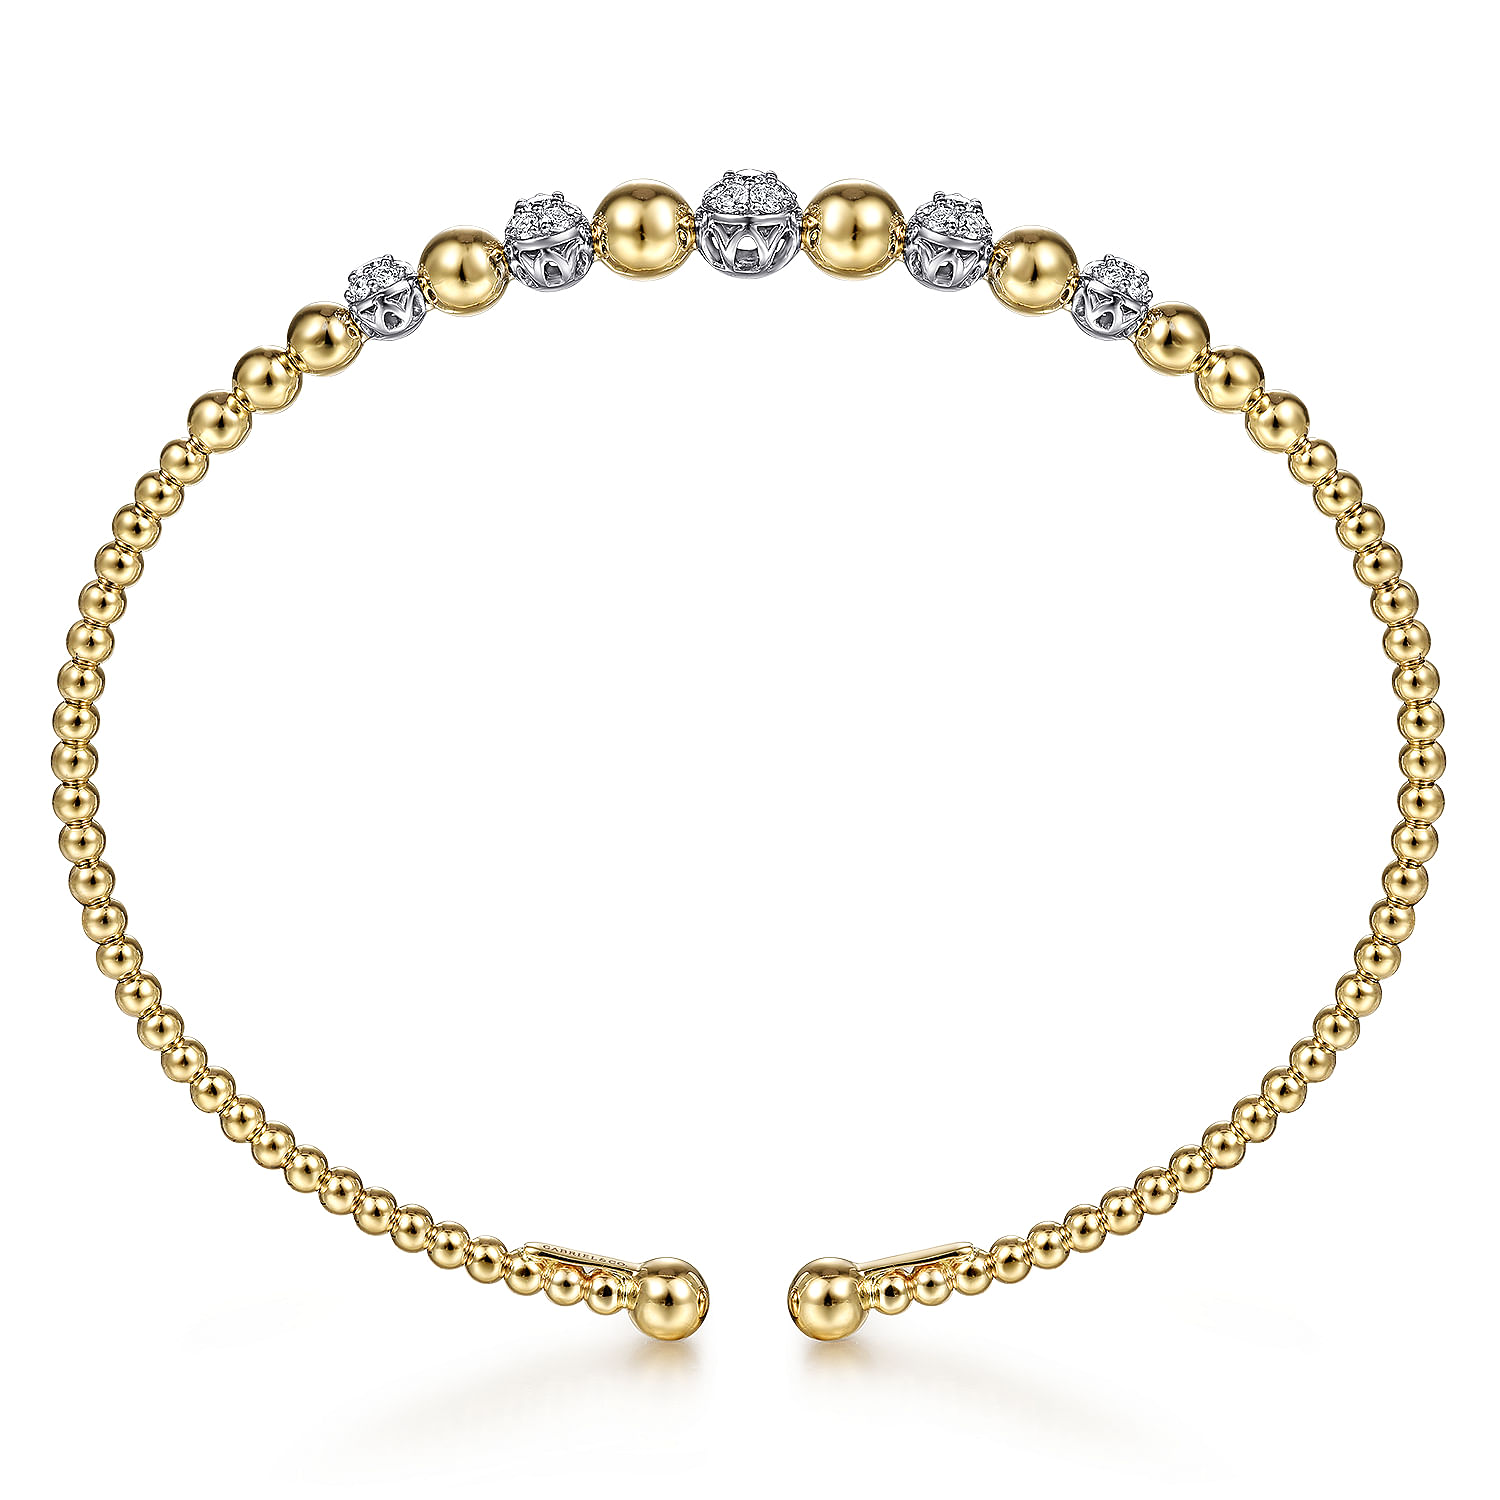 14K Yellow-White Gold Bujukan Bead Cuff Bracelet with Pavé Diamond Stations